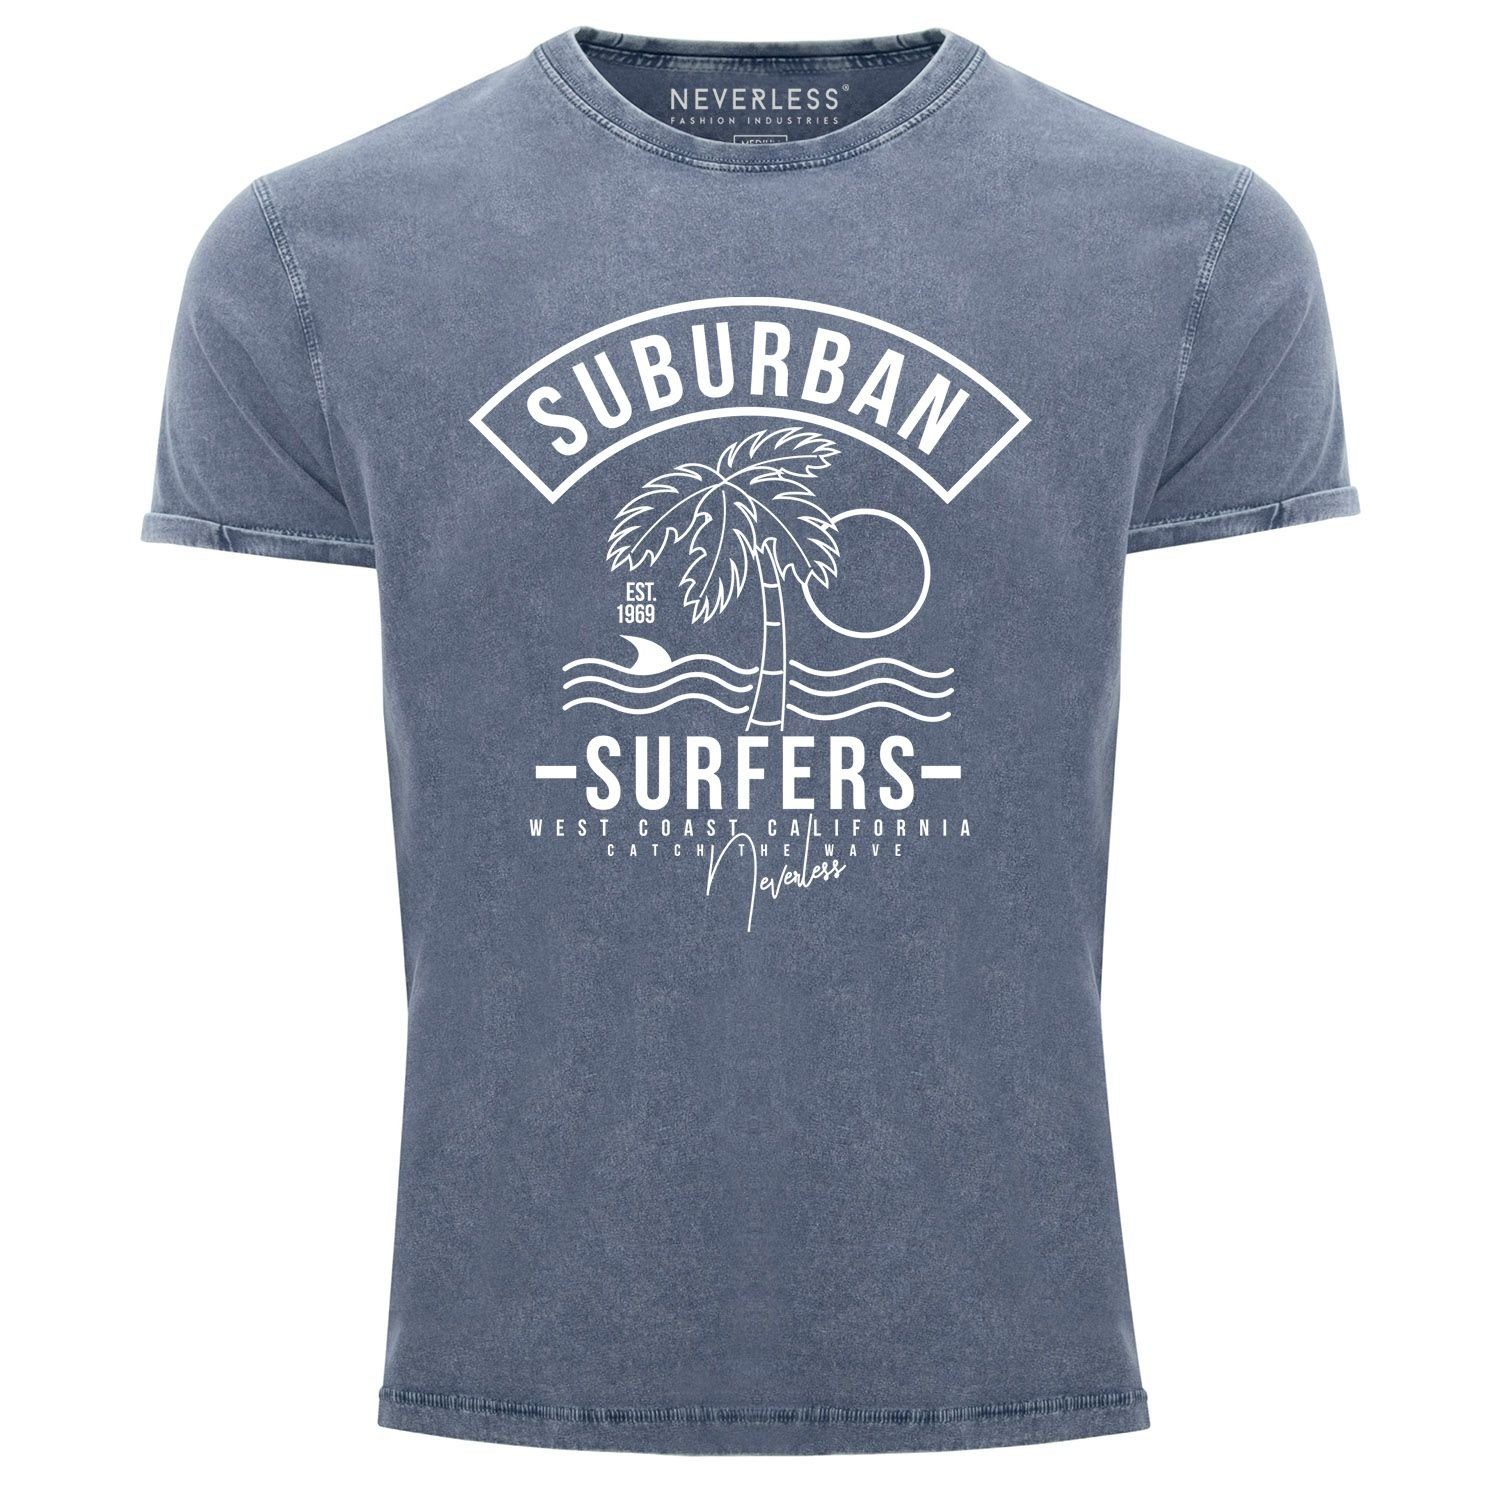 Neverless Print-Shirt Neverless® Herren T-Shirt Vintage Shirt Printshirt Suburban Surfers West Coast California Urlaub Meer Wellenreiten Used Look Slim Fit mit Print blau